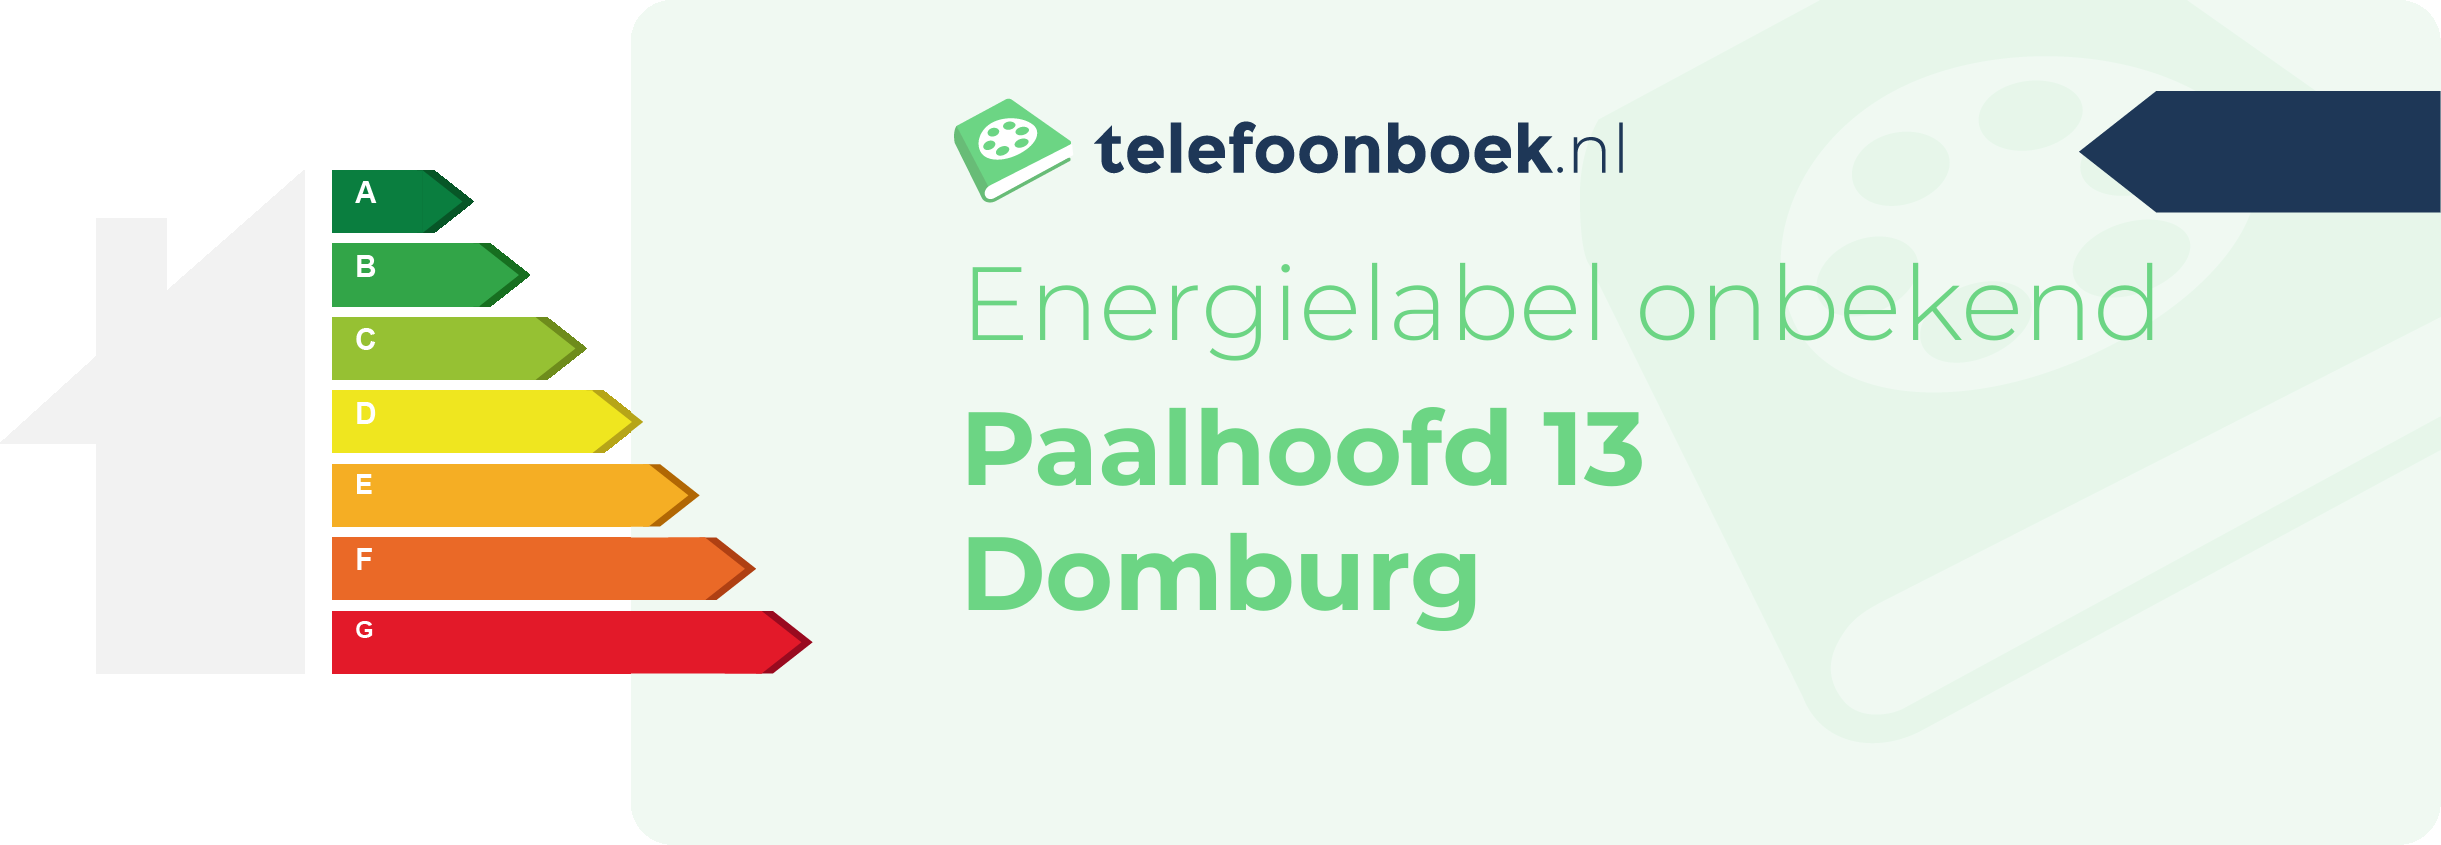 Energielabel Paalhoofd 13 Domburg